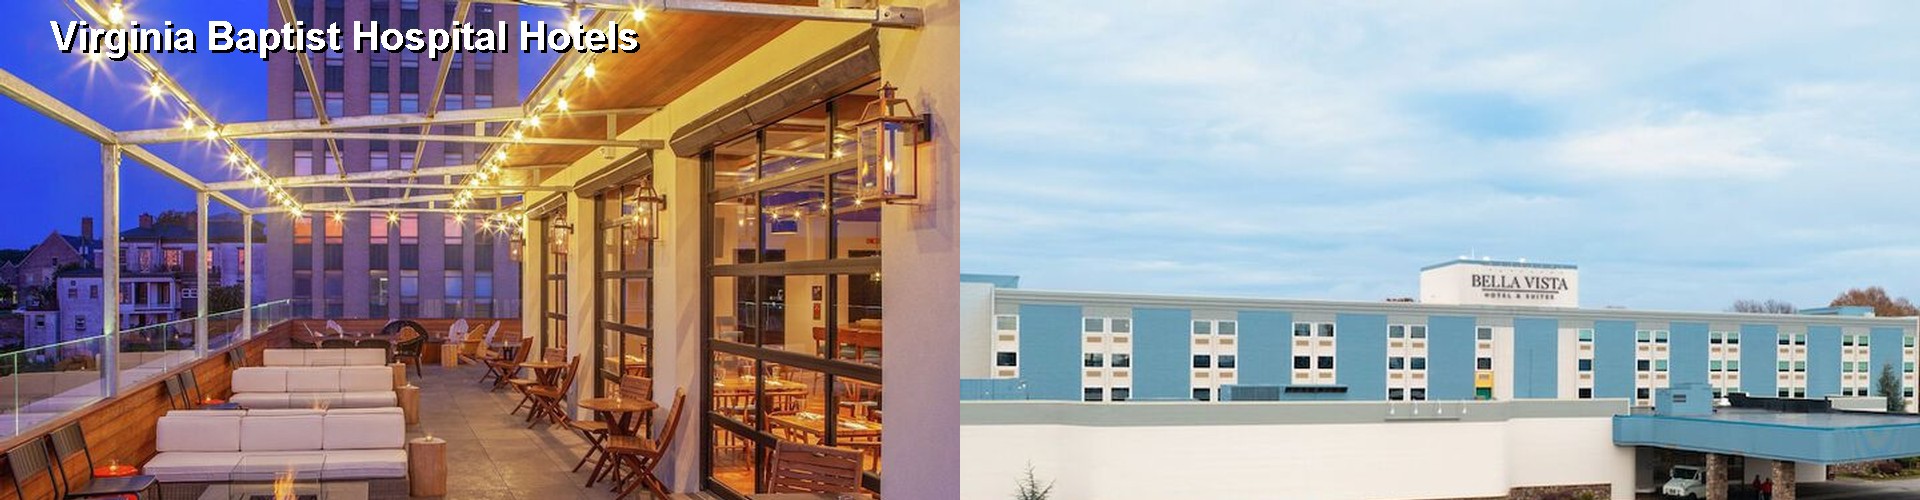 3 Best Hotels near Virginia Baptist Hospital